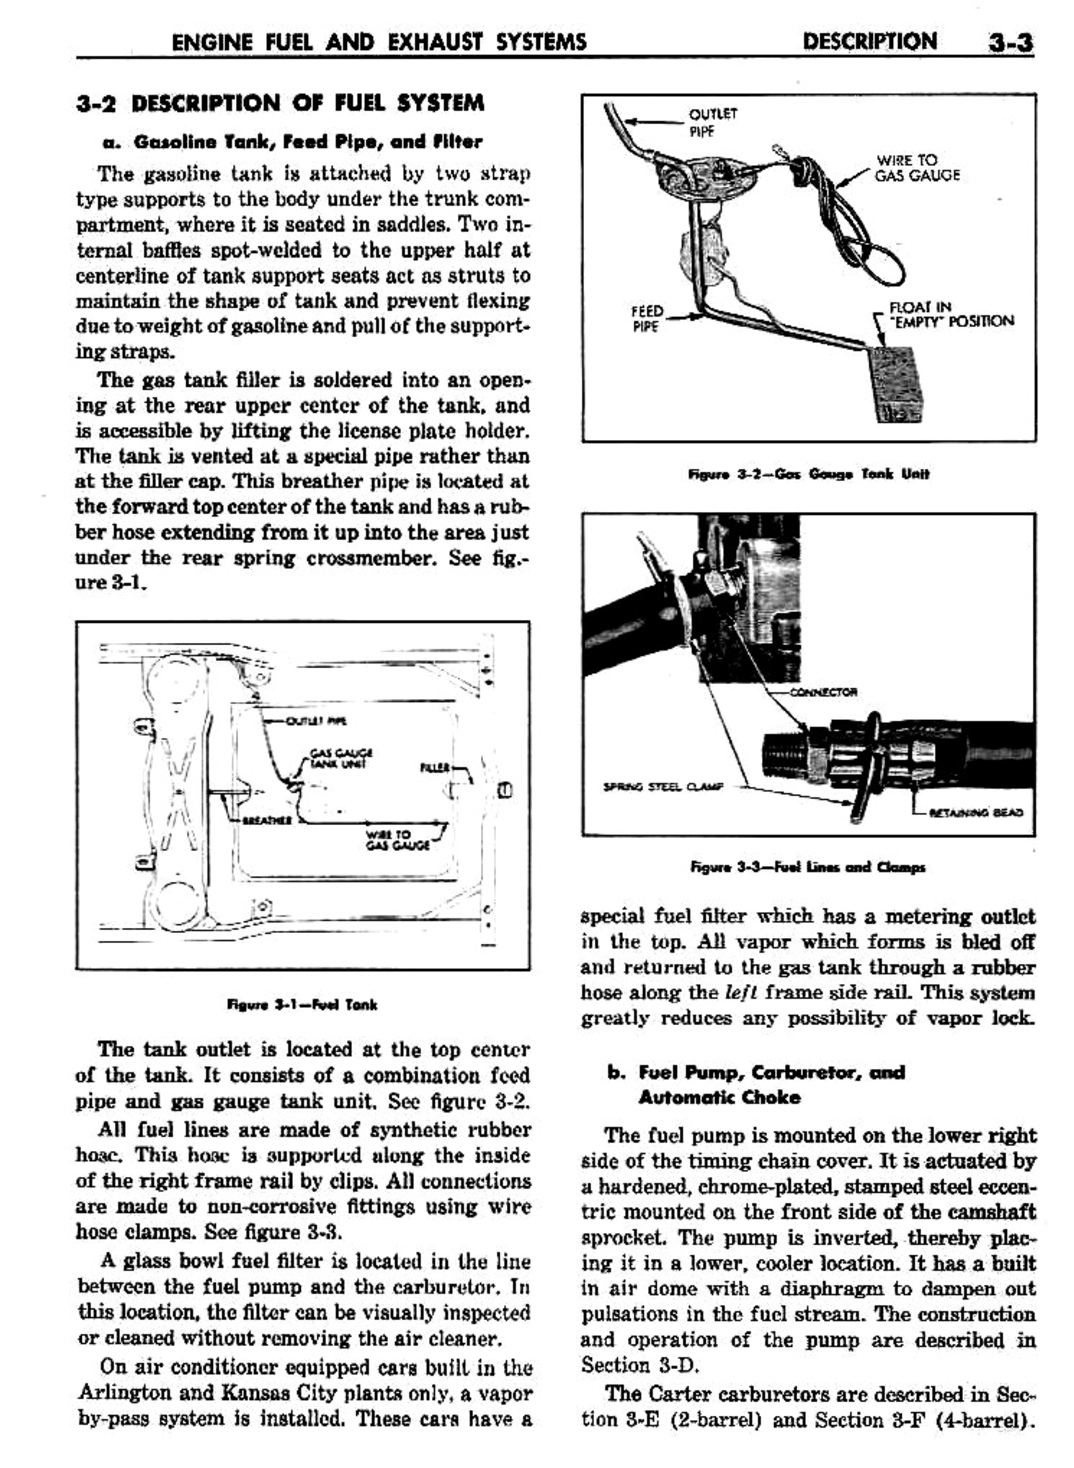 n_04 1959 Buick Shop Manual - Engine Fuel & Exhaust-003-003.jpg